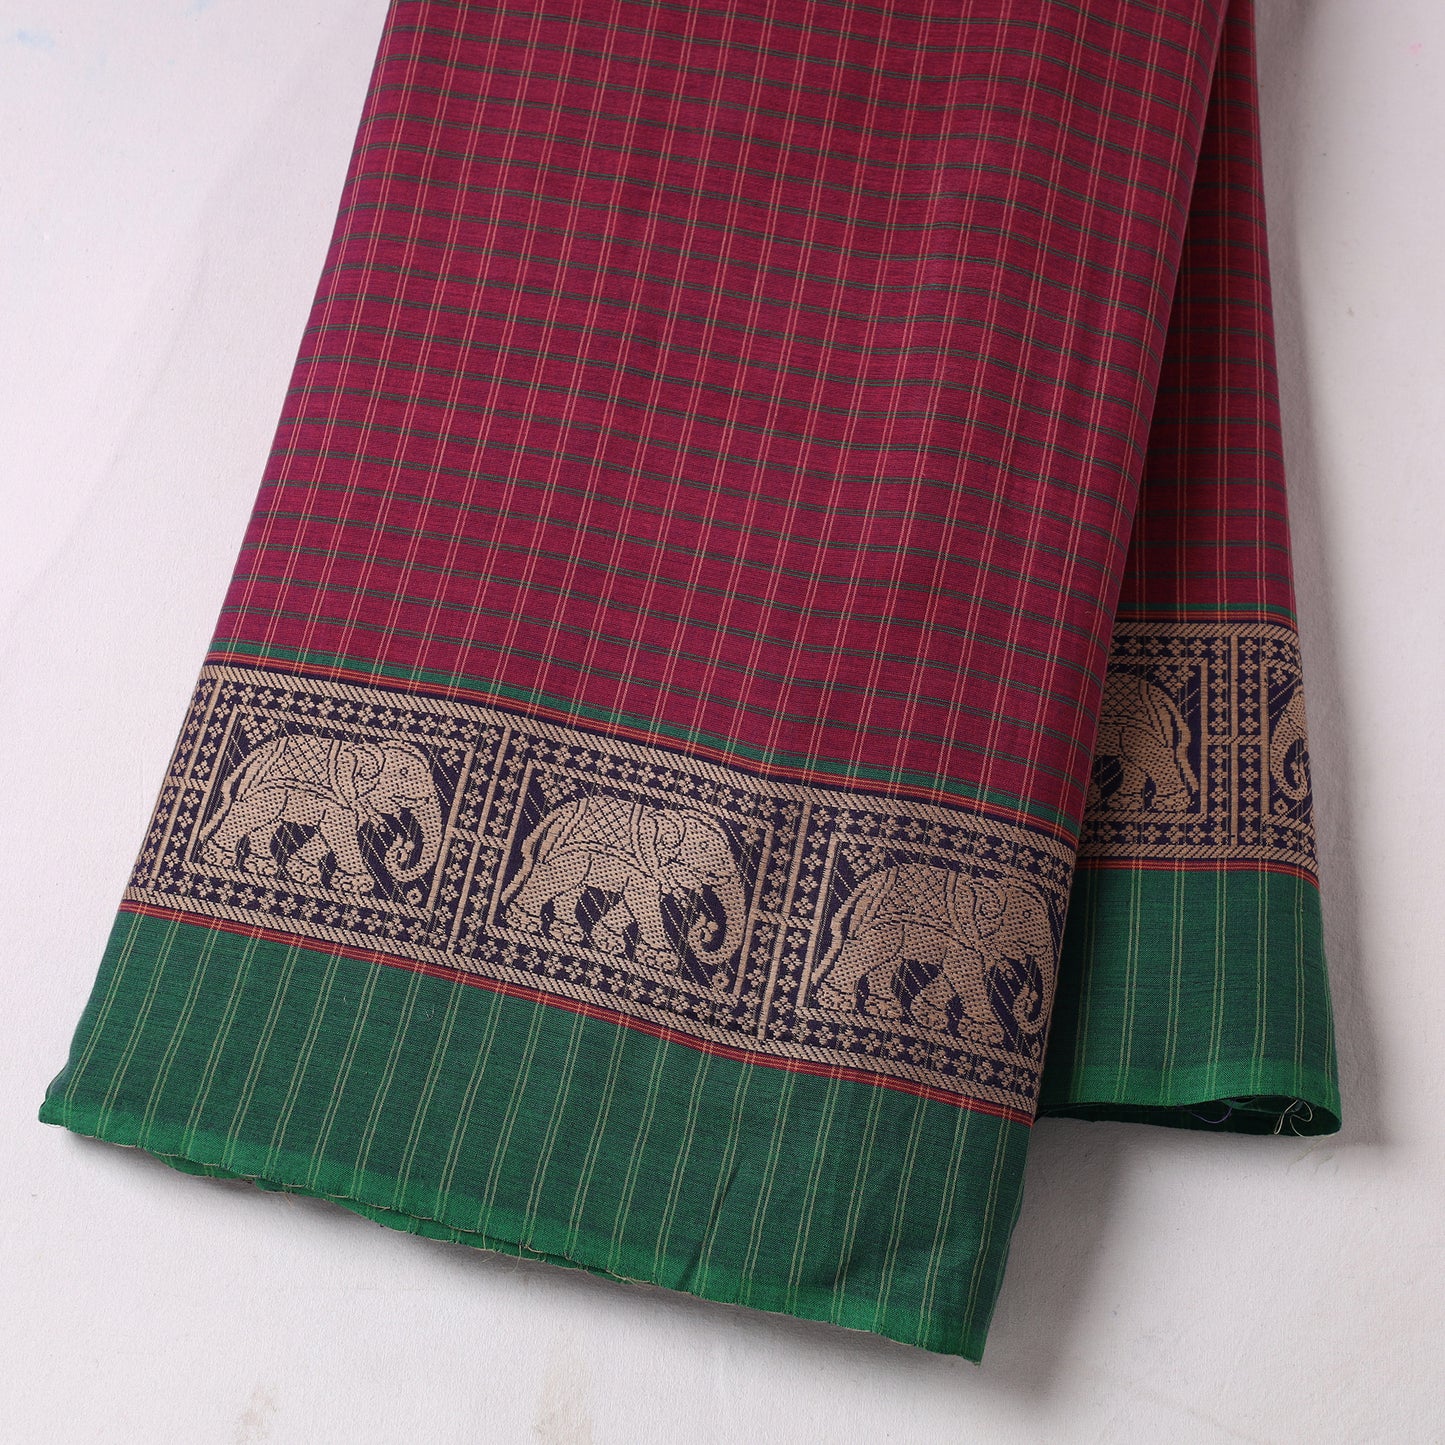 Maroon - Prewashed Dharwad Cotton Thread Border Fabric 32